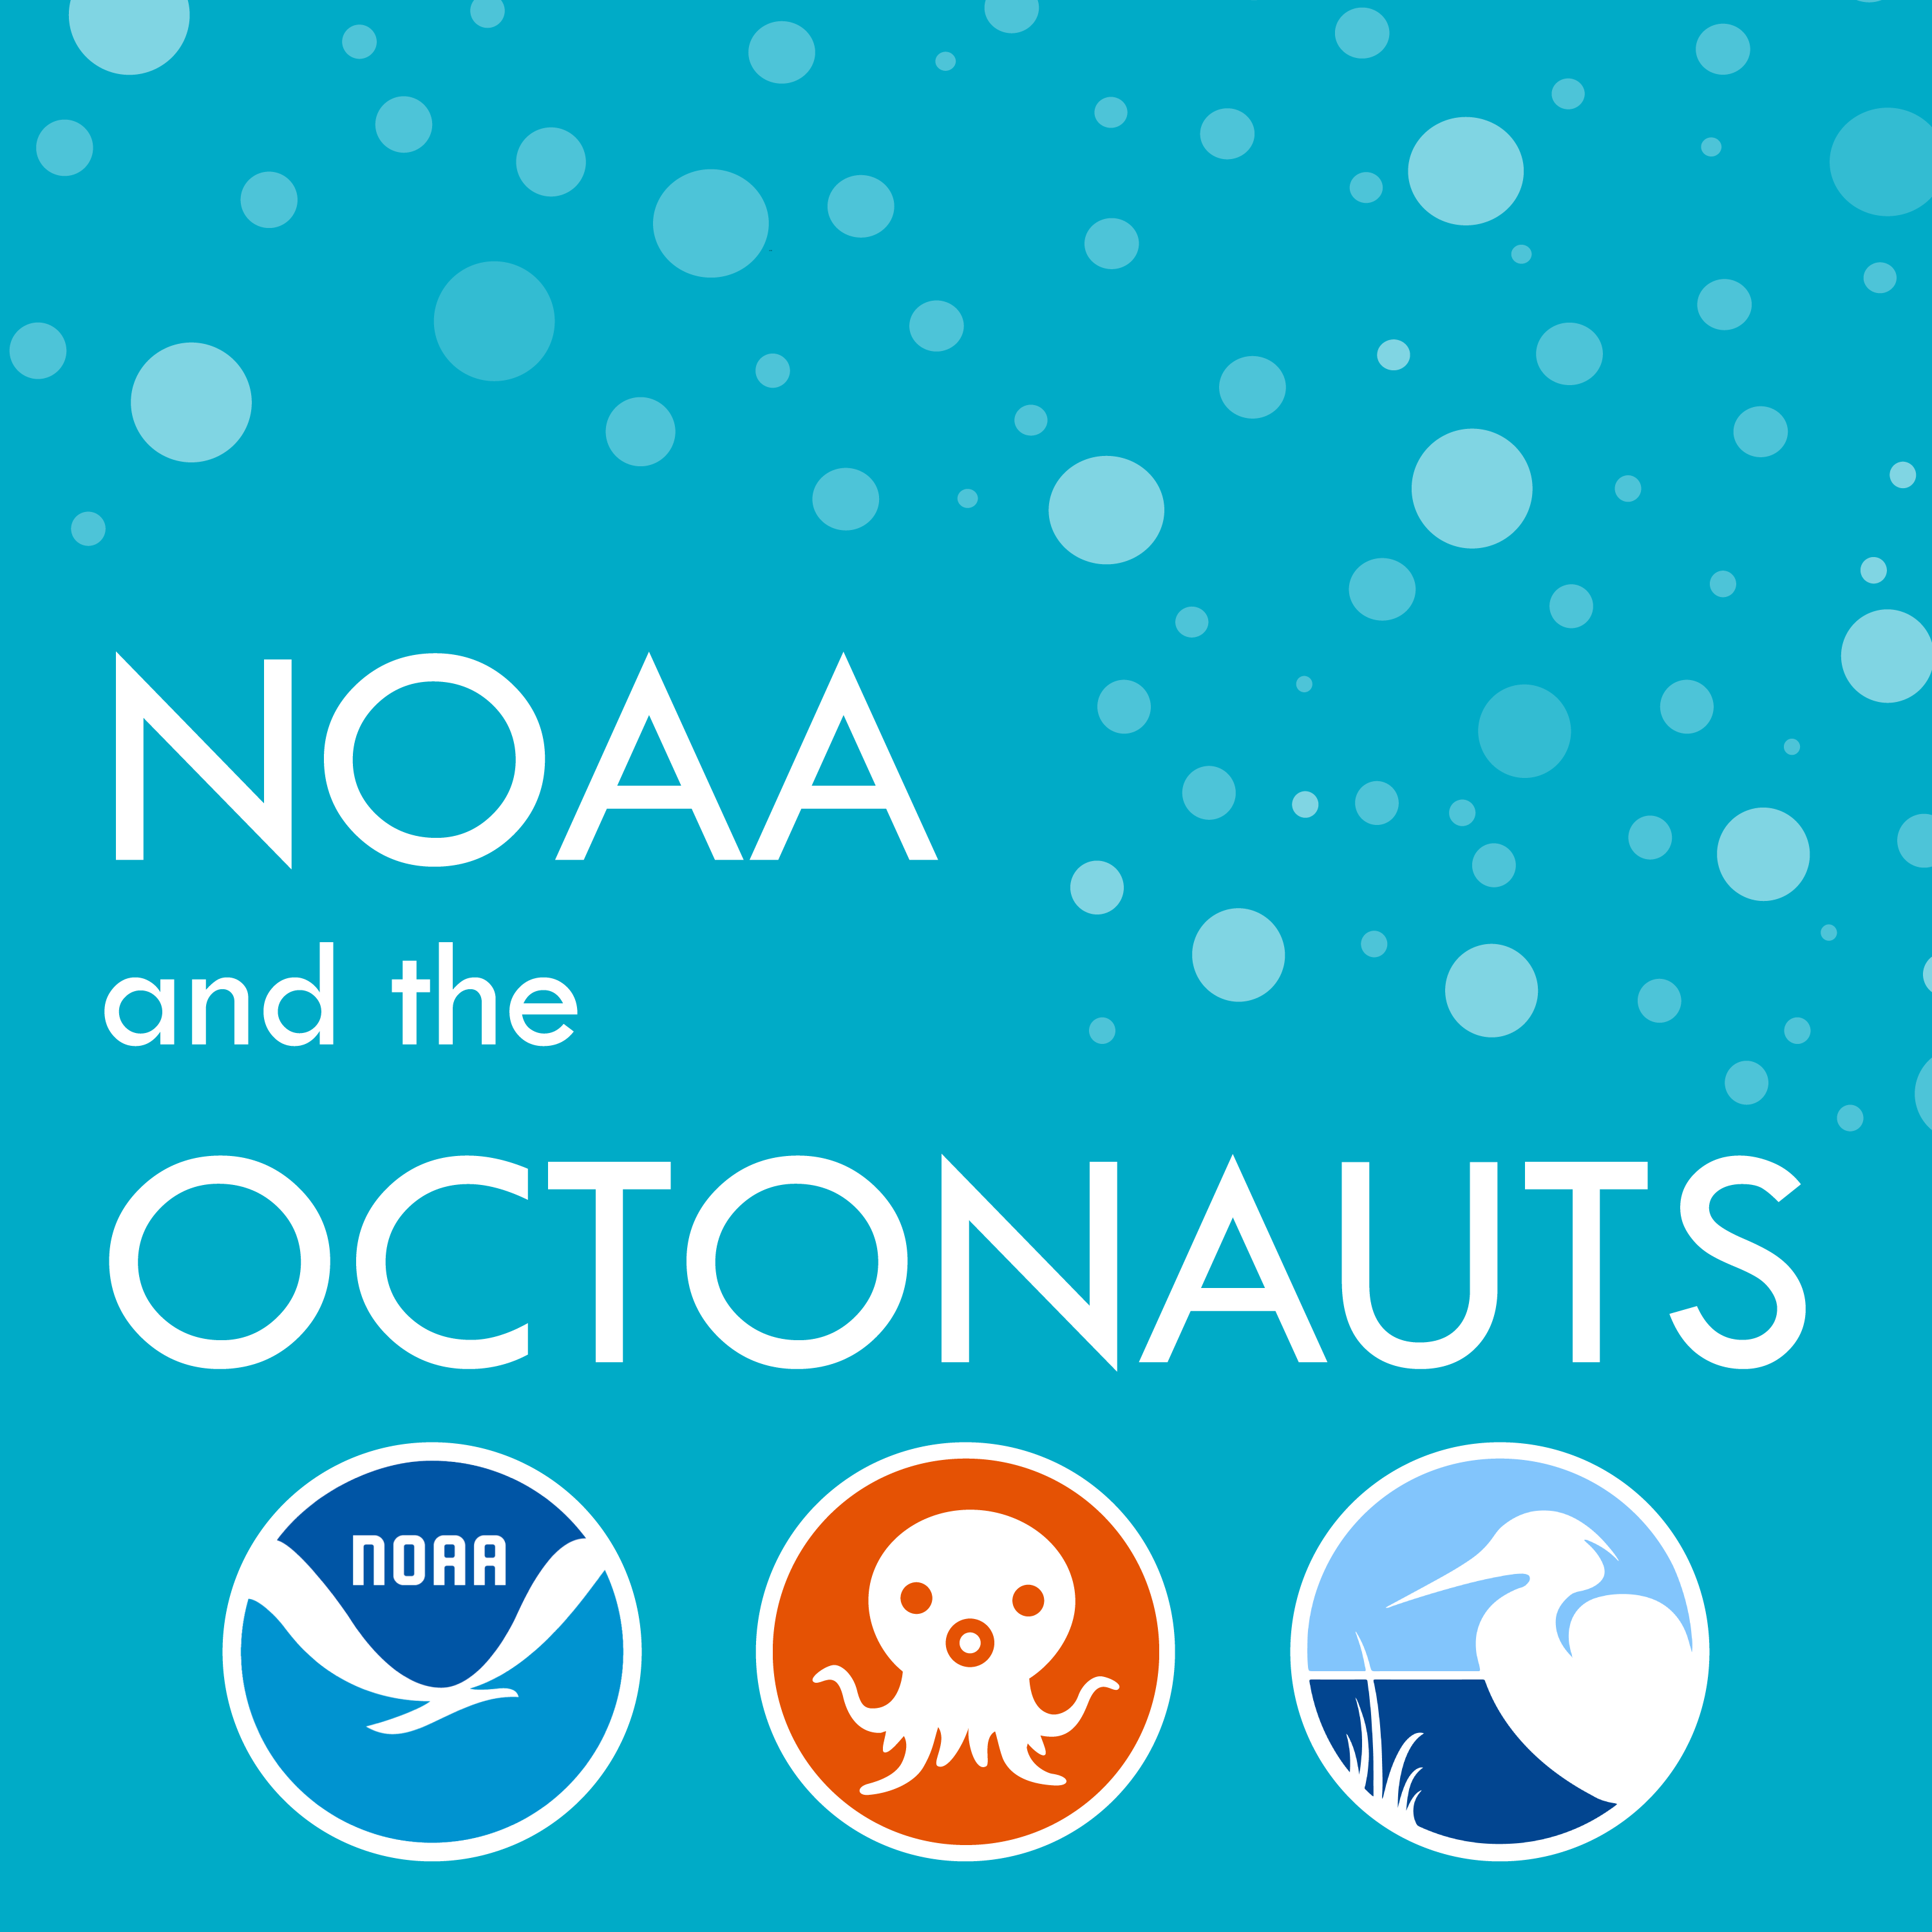 octonauts logo printable